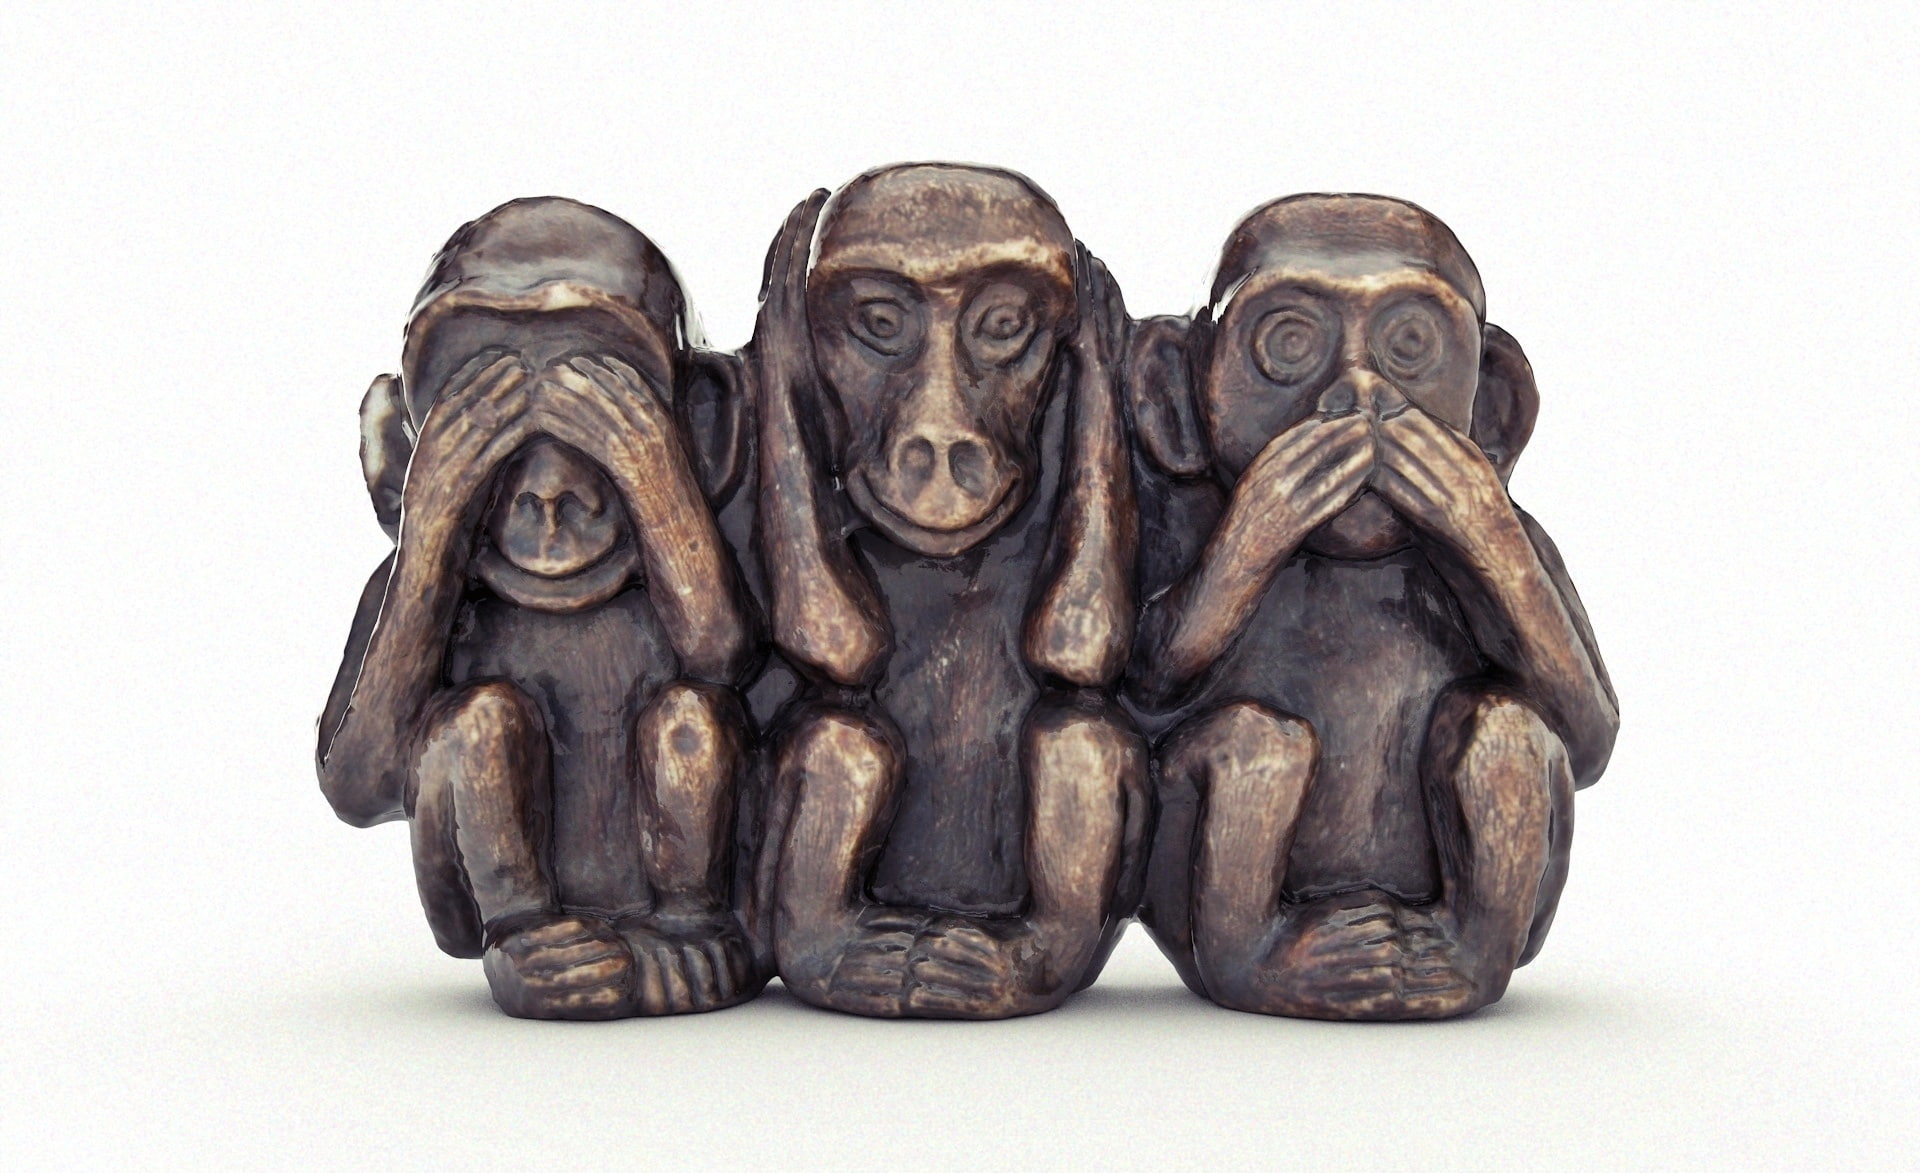 The Monkeys 3D, brown Three Wise Monkeys figurine, Artistic, flisozantana